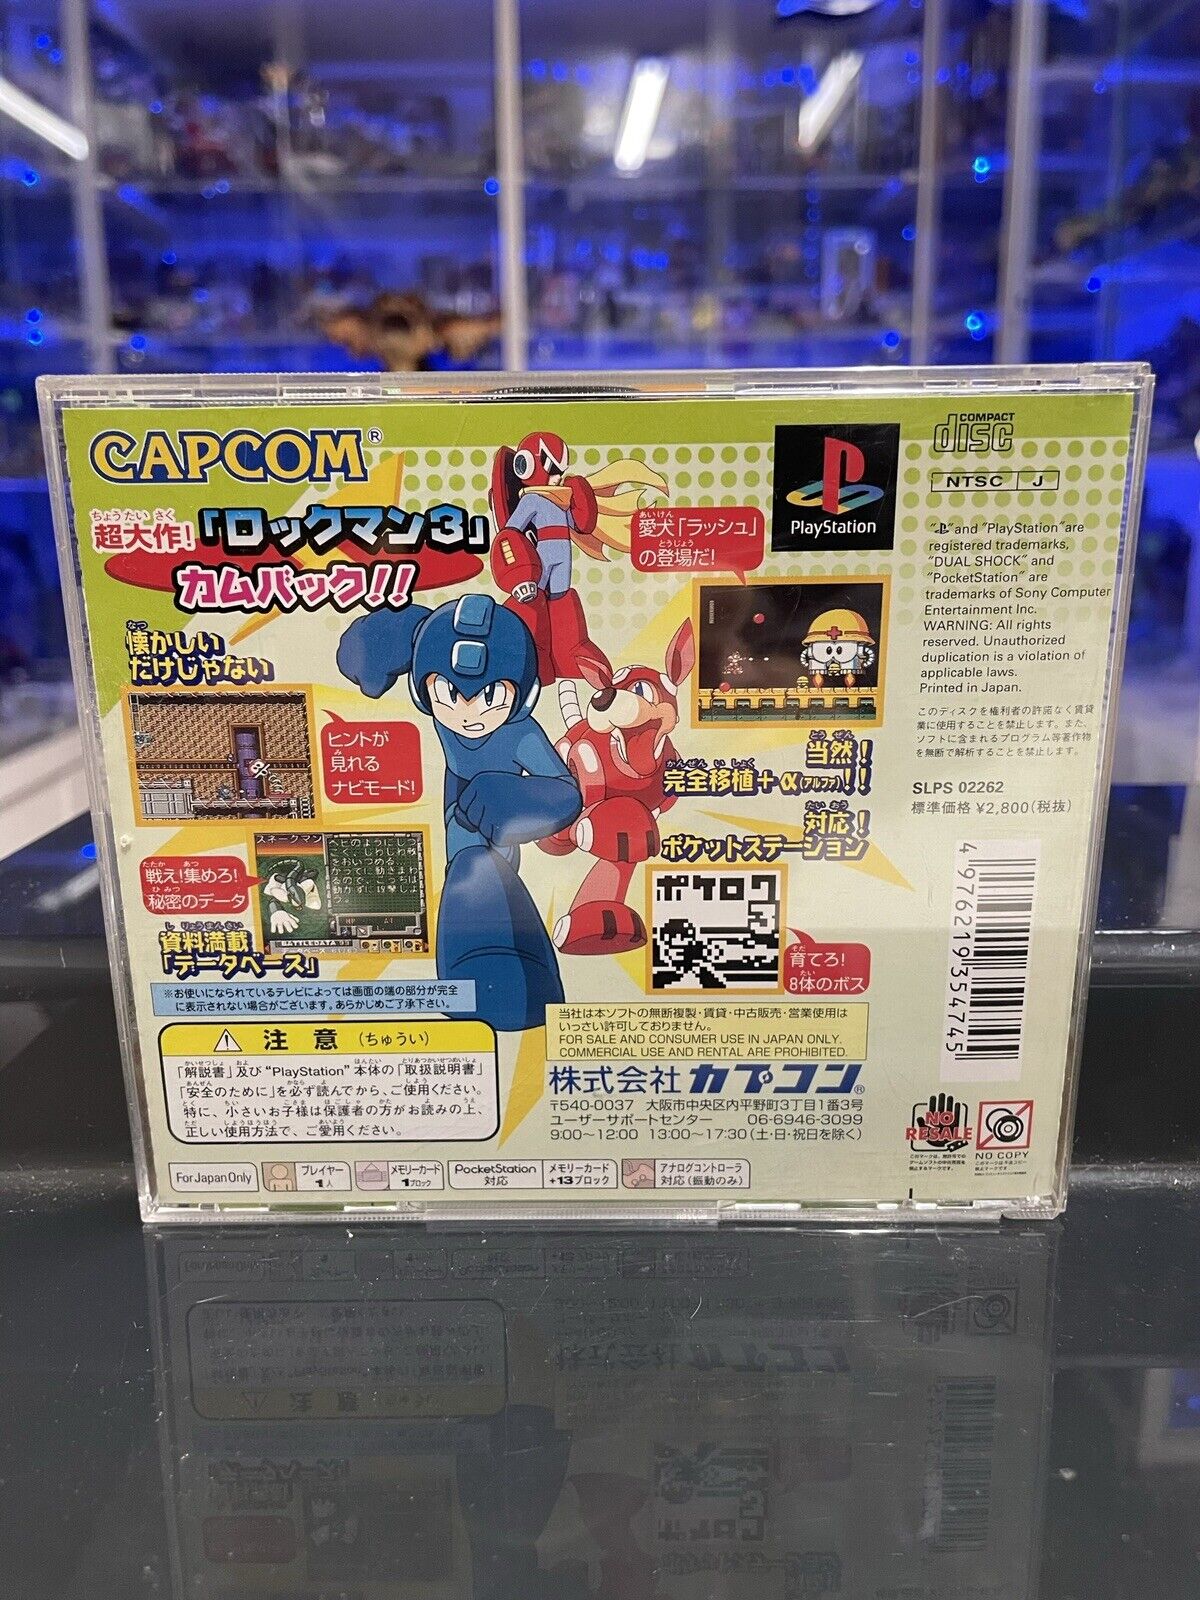 Ps1-Rockman-complete-works-3-Megaman-Capcom-Playstation-Sony-NTSC-jap-Slps-02262-144906645795-2